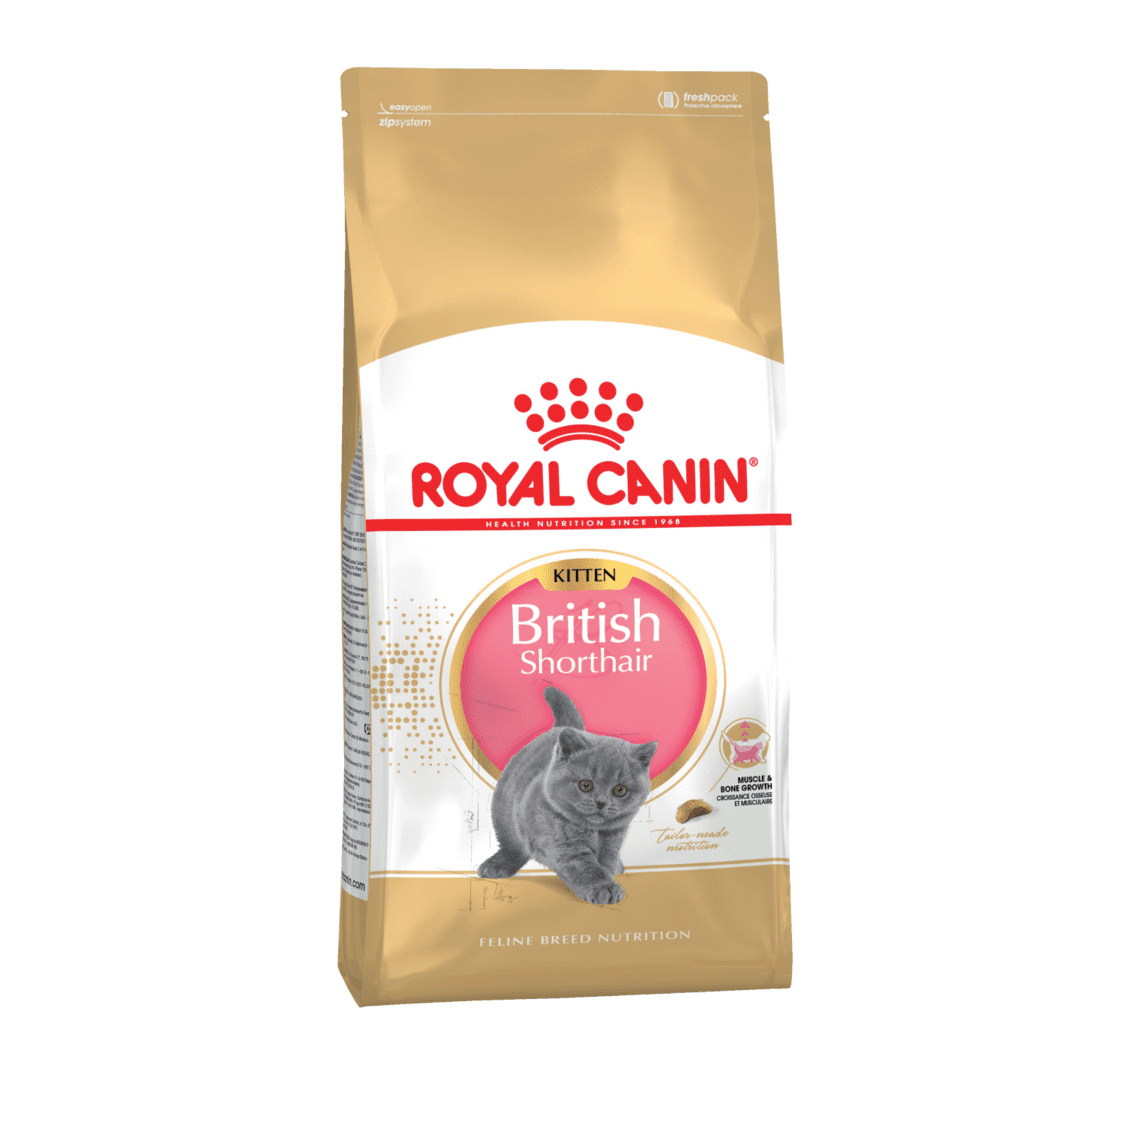 Royal Canin Корм Royal Canin корм для британских короткошерстных котят 4-12 мес. (10 кг) royal canin корм royal canin для персидских котят 4 12 мес 10 кг